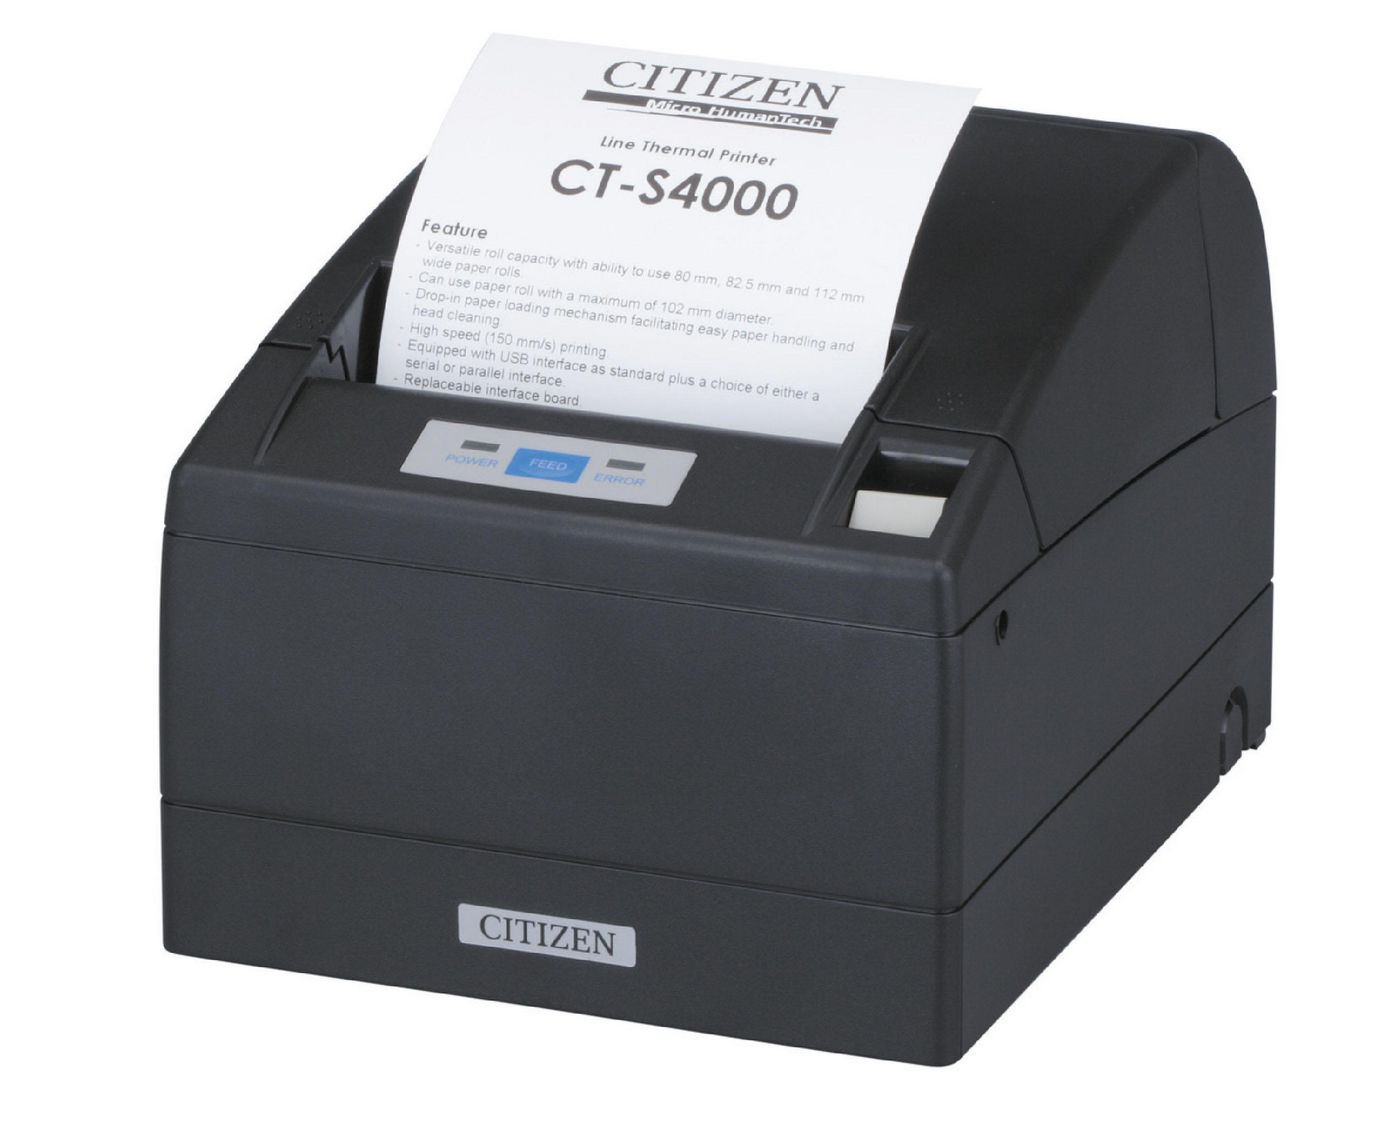 Citizen CTS4000USBBK CT-S4000, USB, cutter, black 